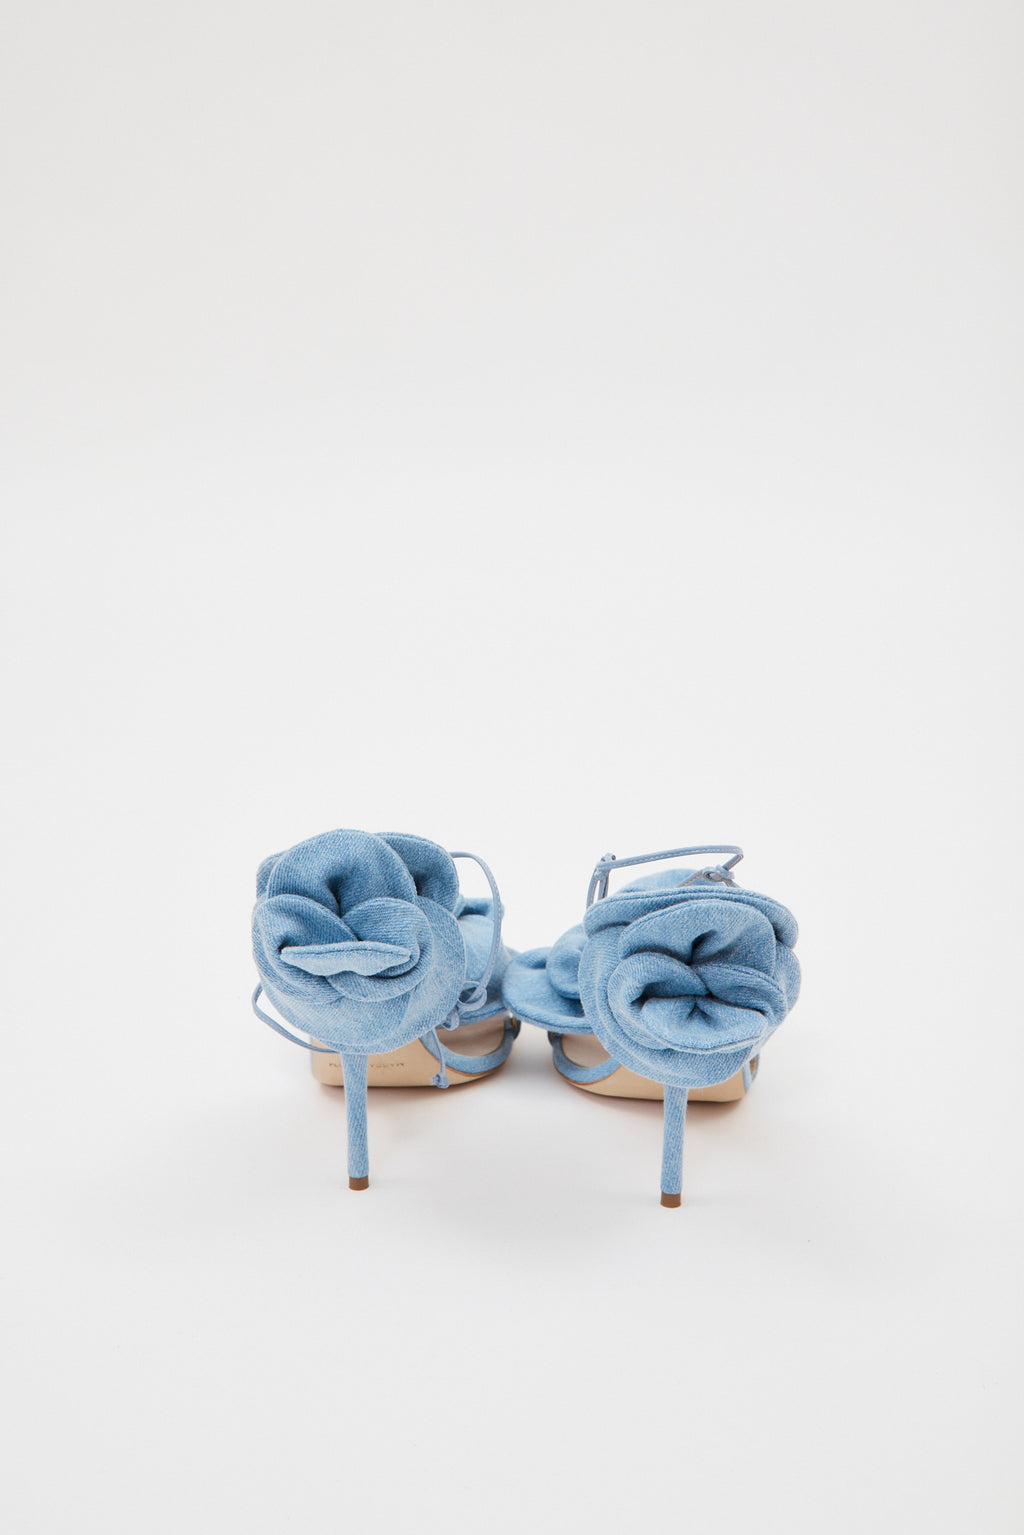 Double Flower Blue Denim Heel Sandals